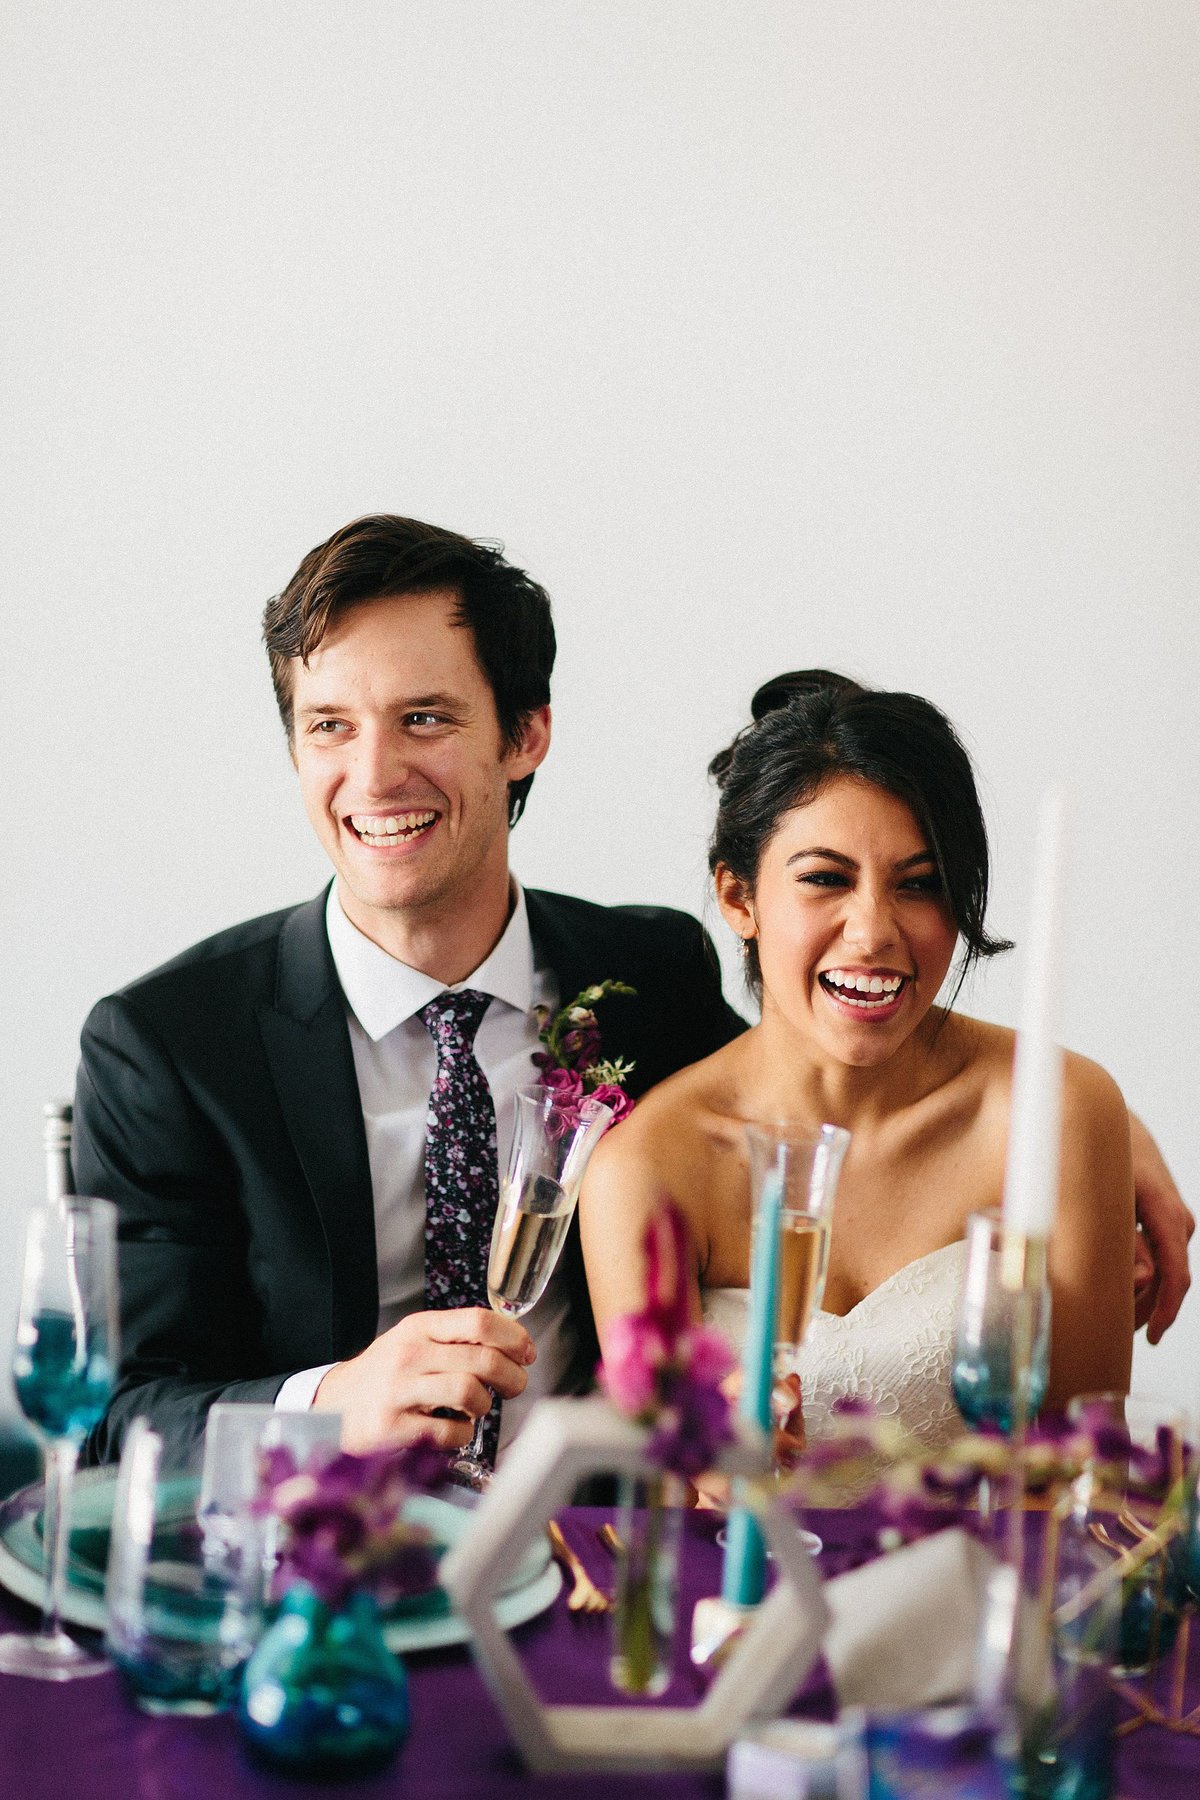 Smiling bride and groom at purple and teal wedding reception at Factory Atlanta